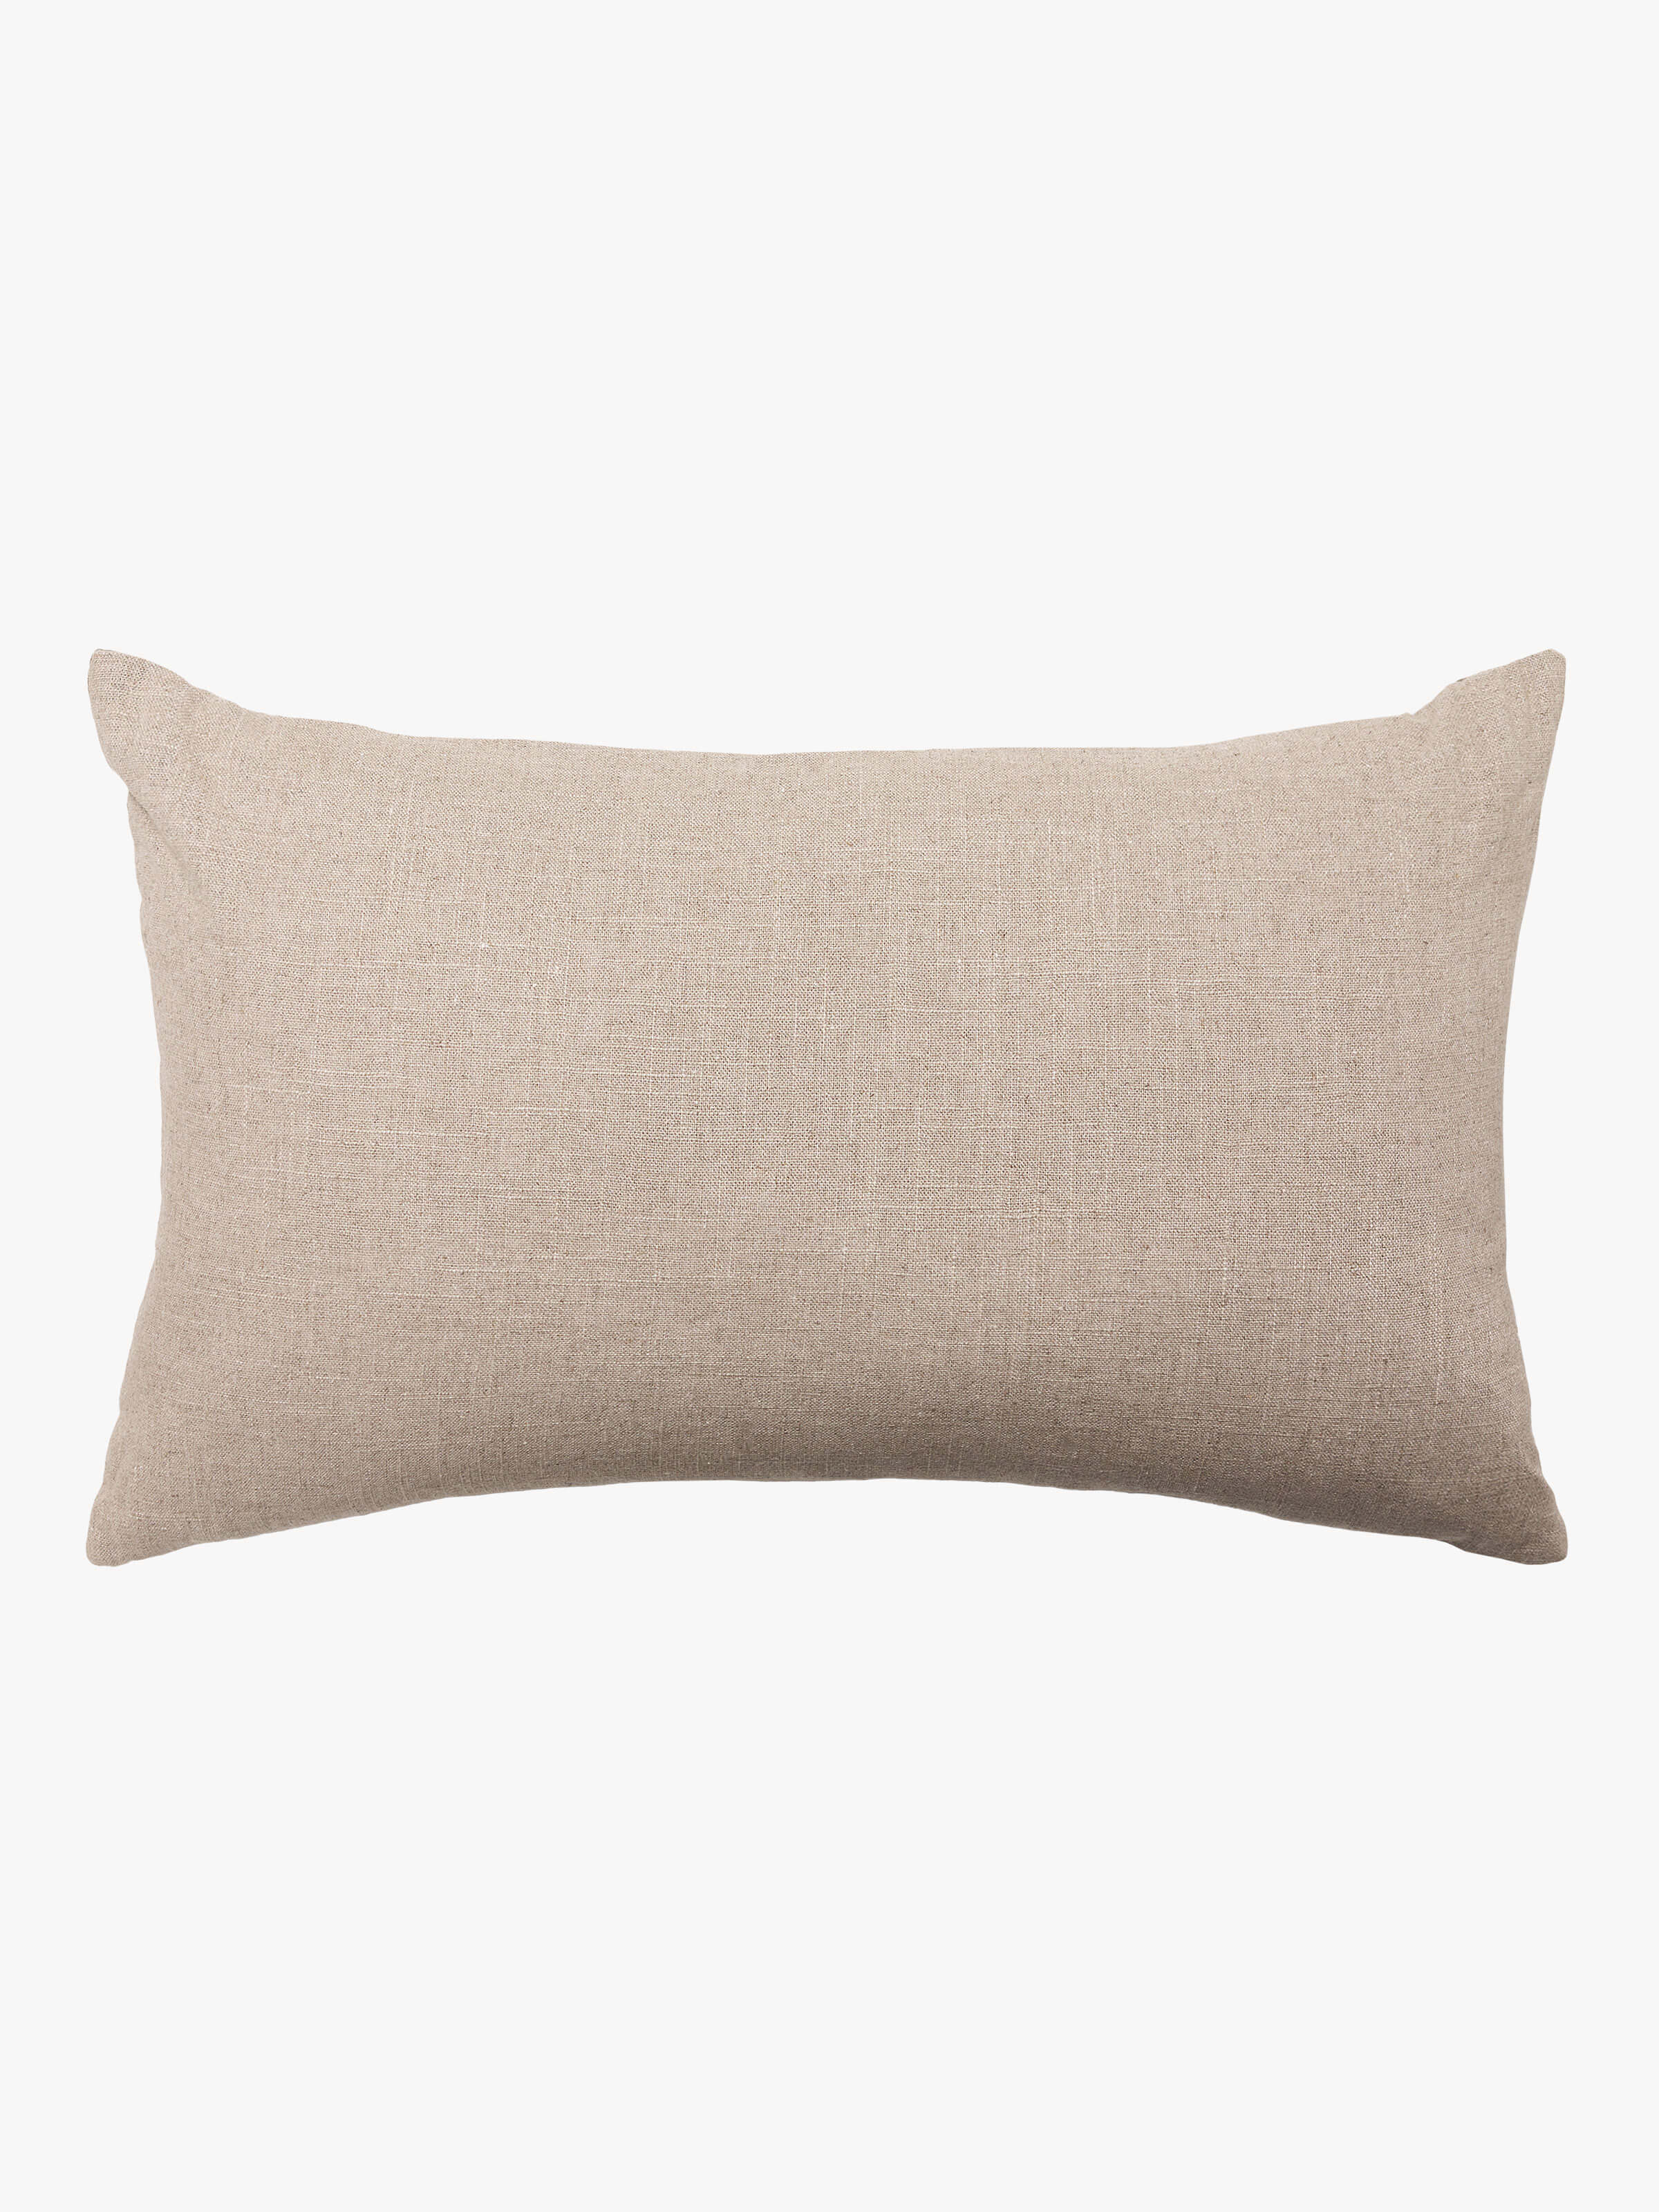 Etro Olive Stripe Velvet Cushion